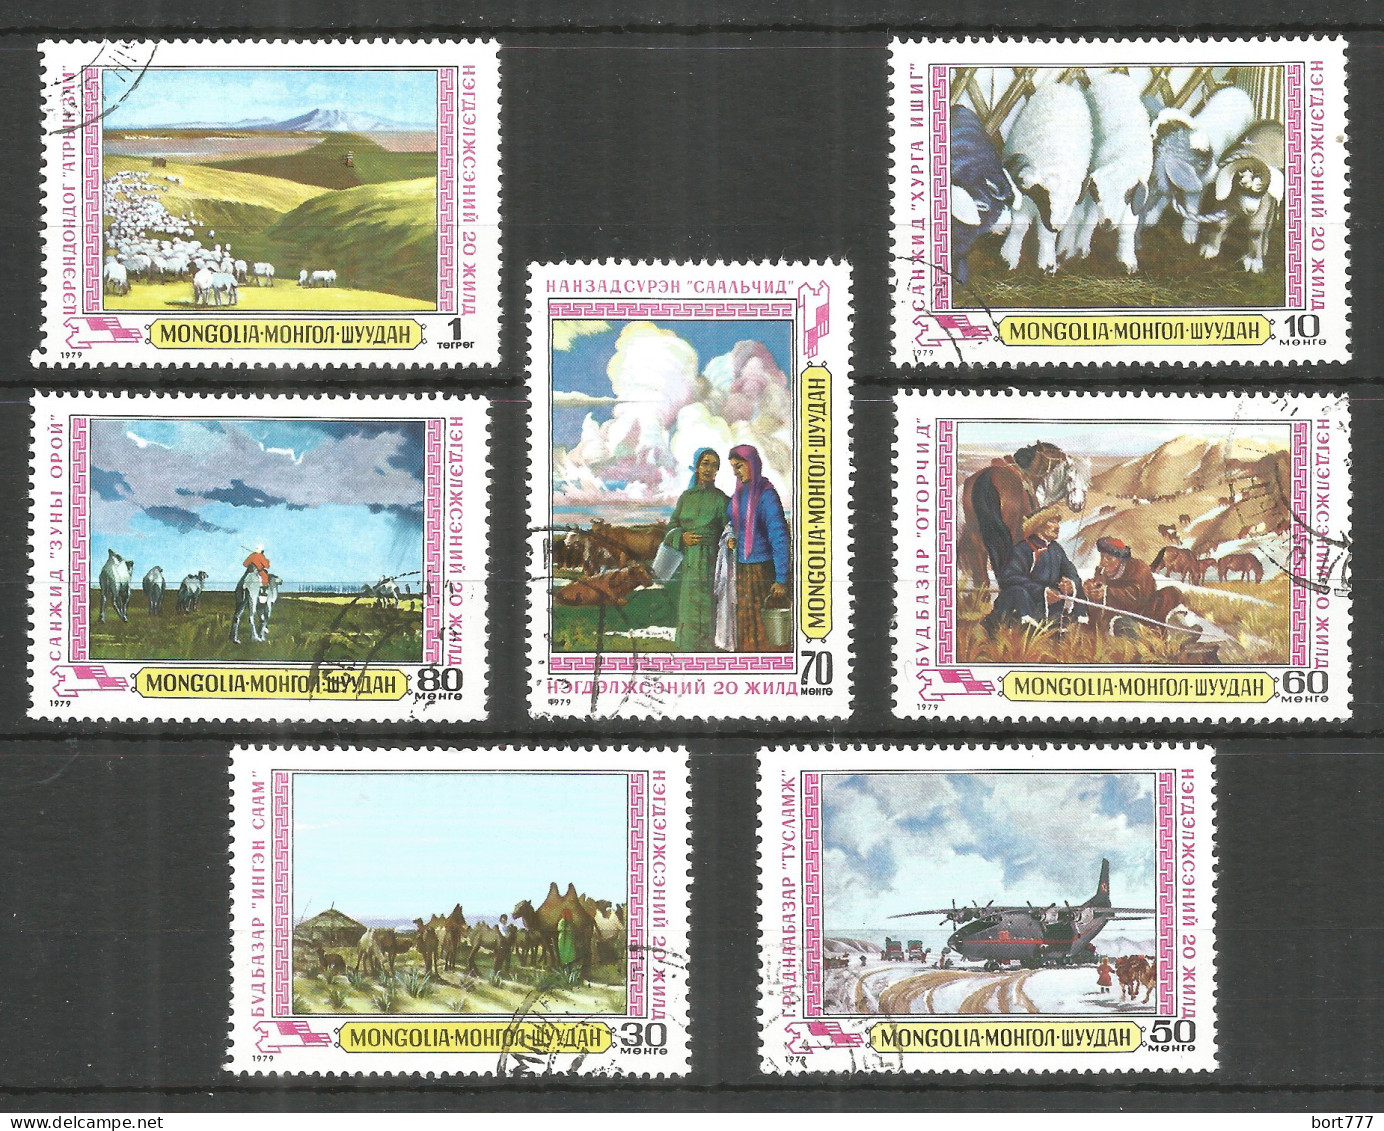 Mongolia 1979 Used Stamps CTO - Mongolia